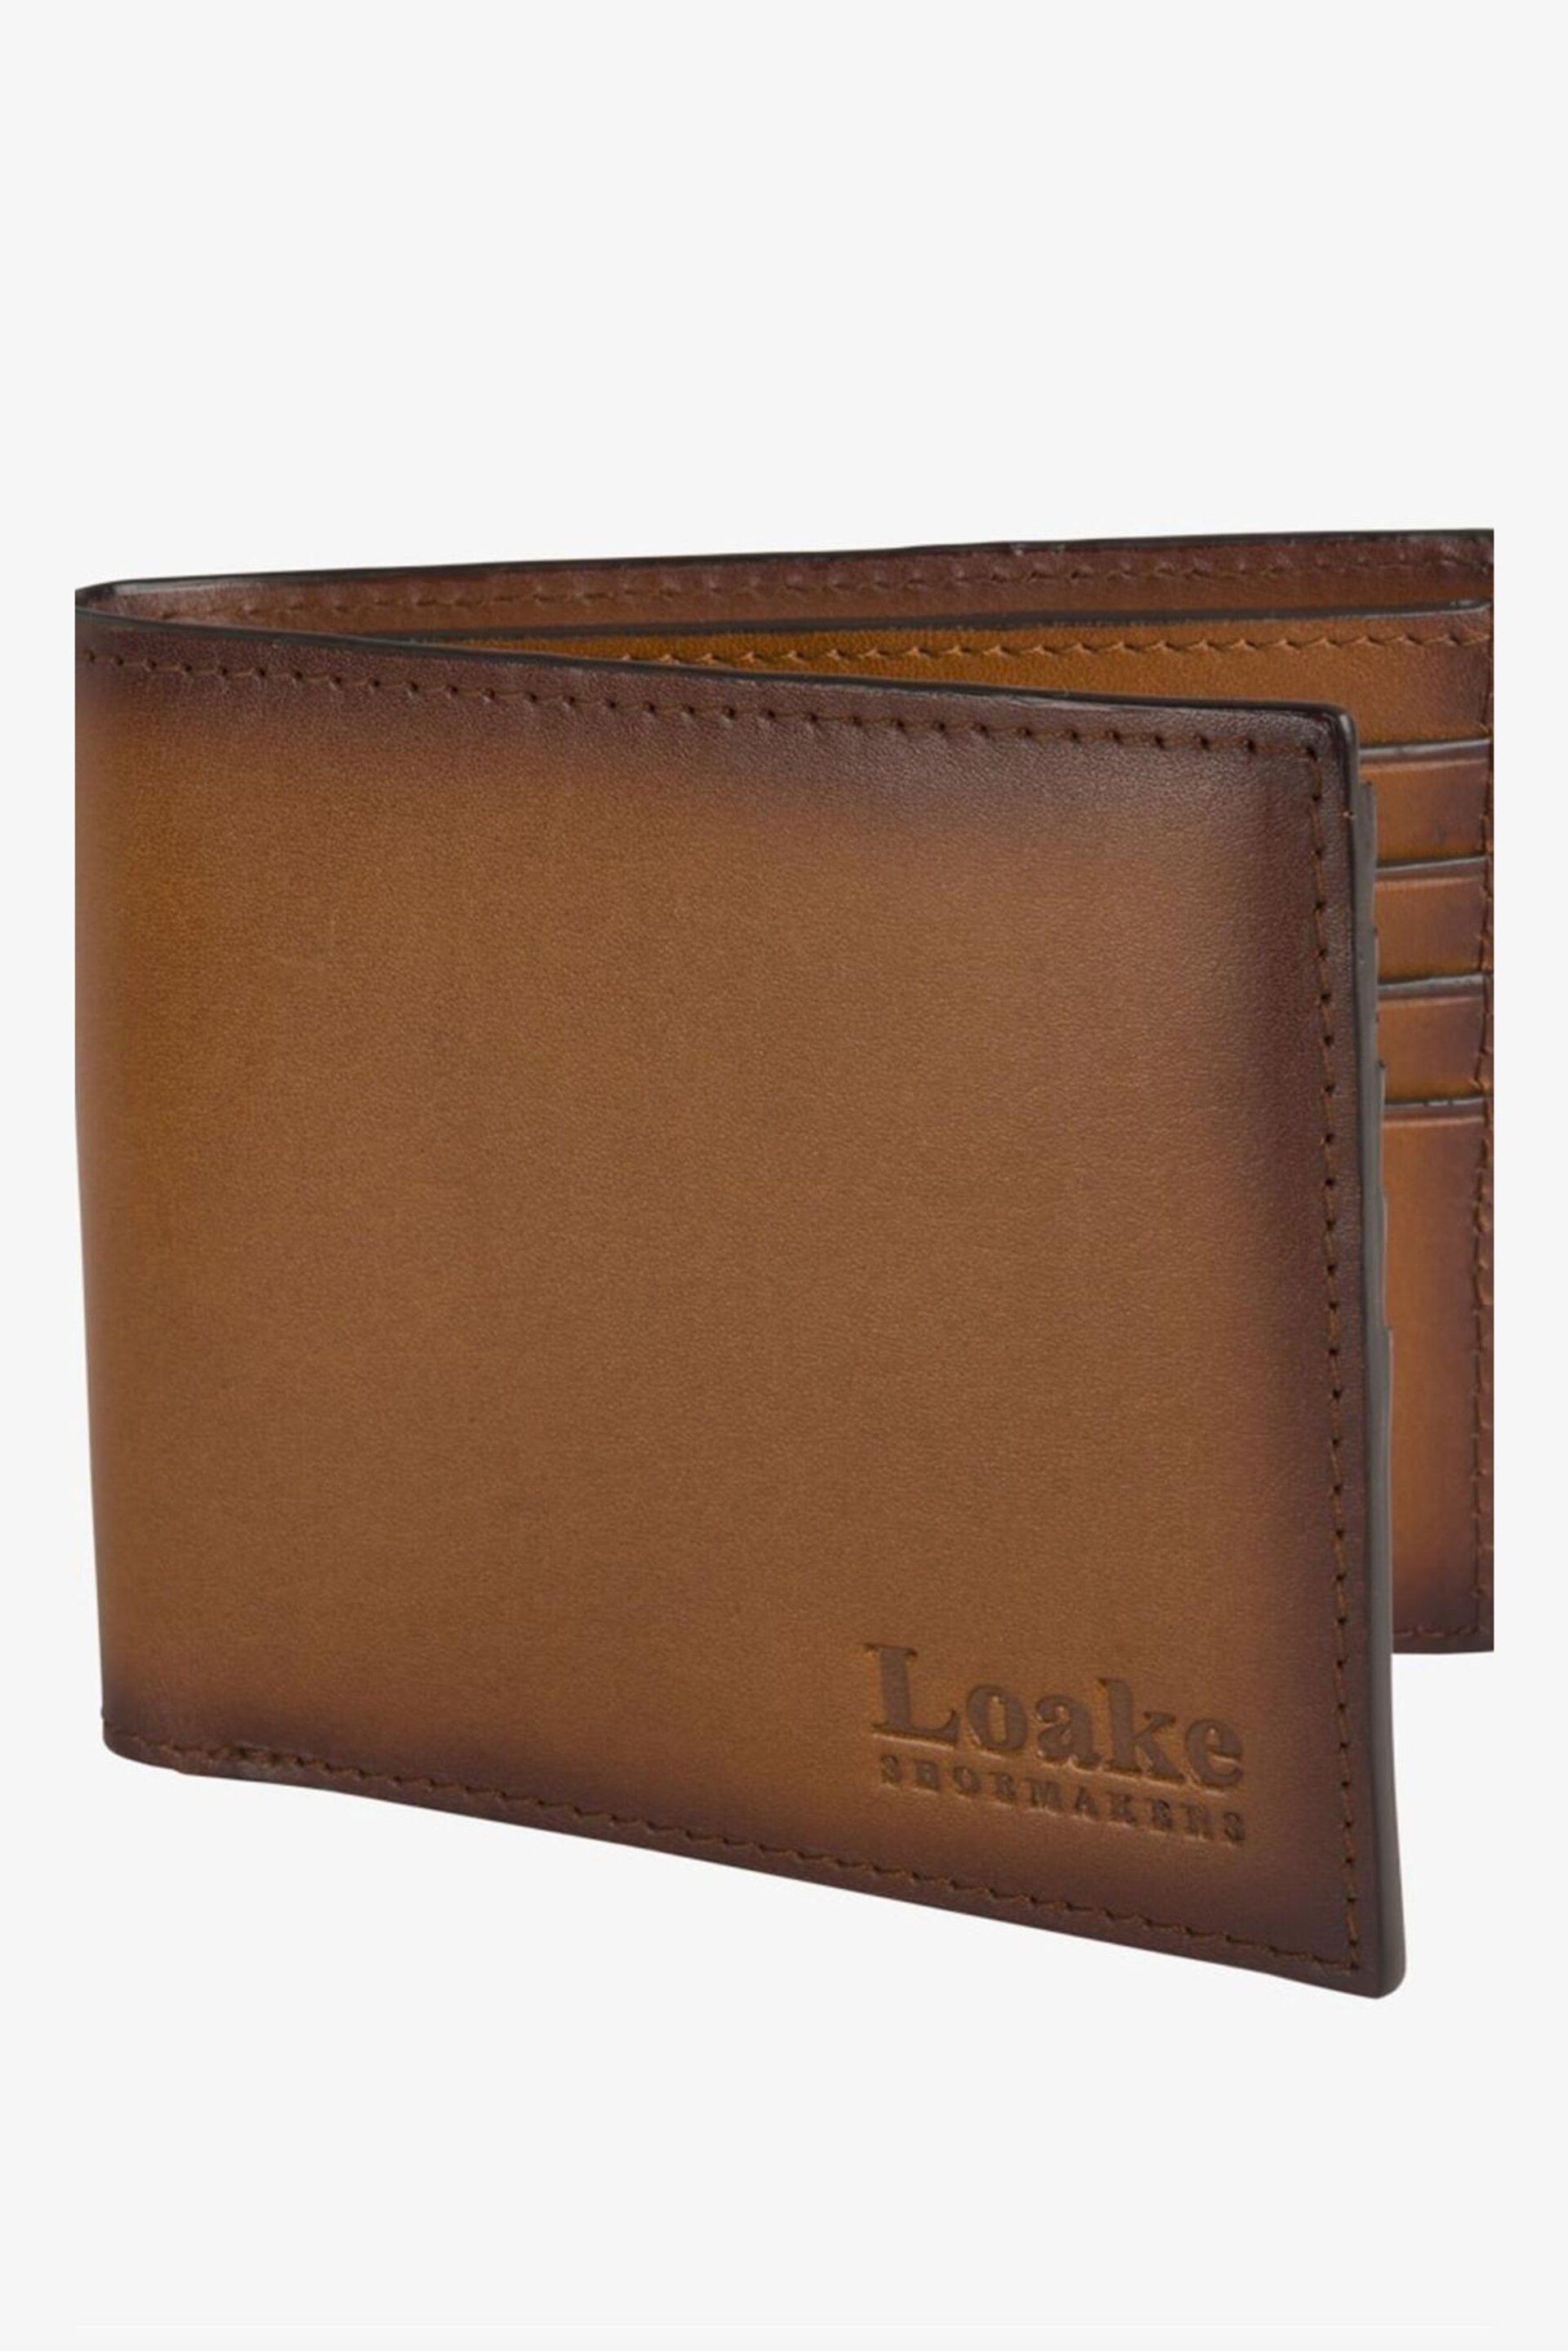 Loake Midland Wallet - Image 1 of 2